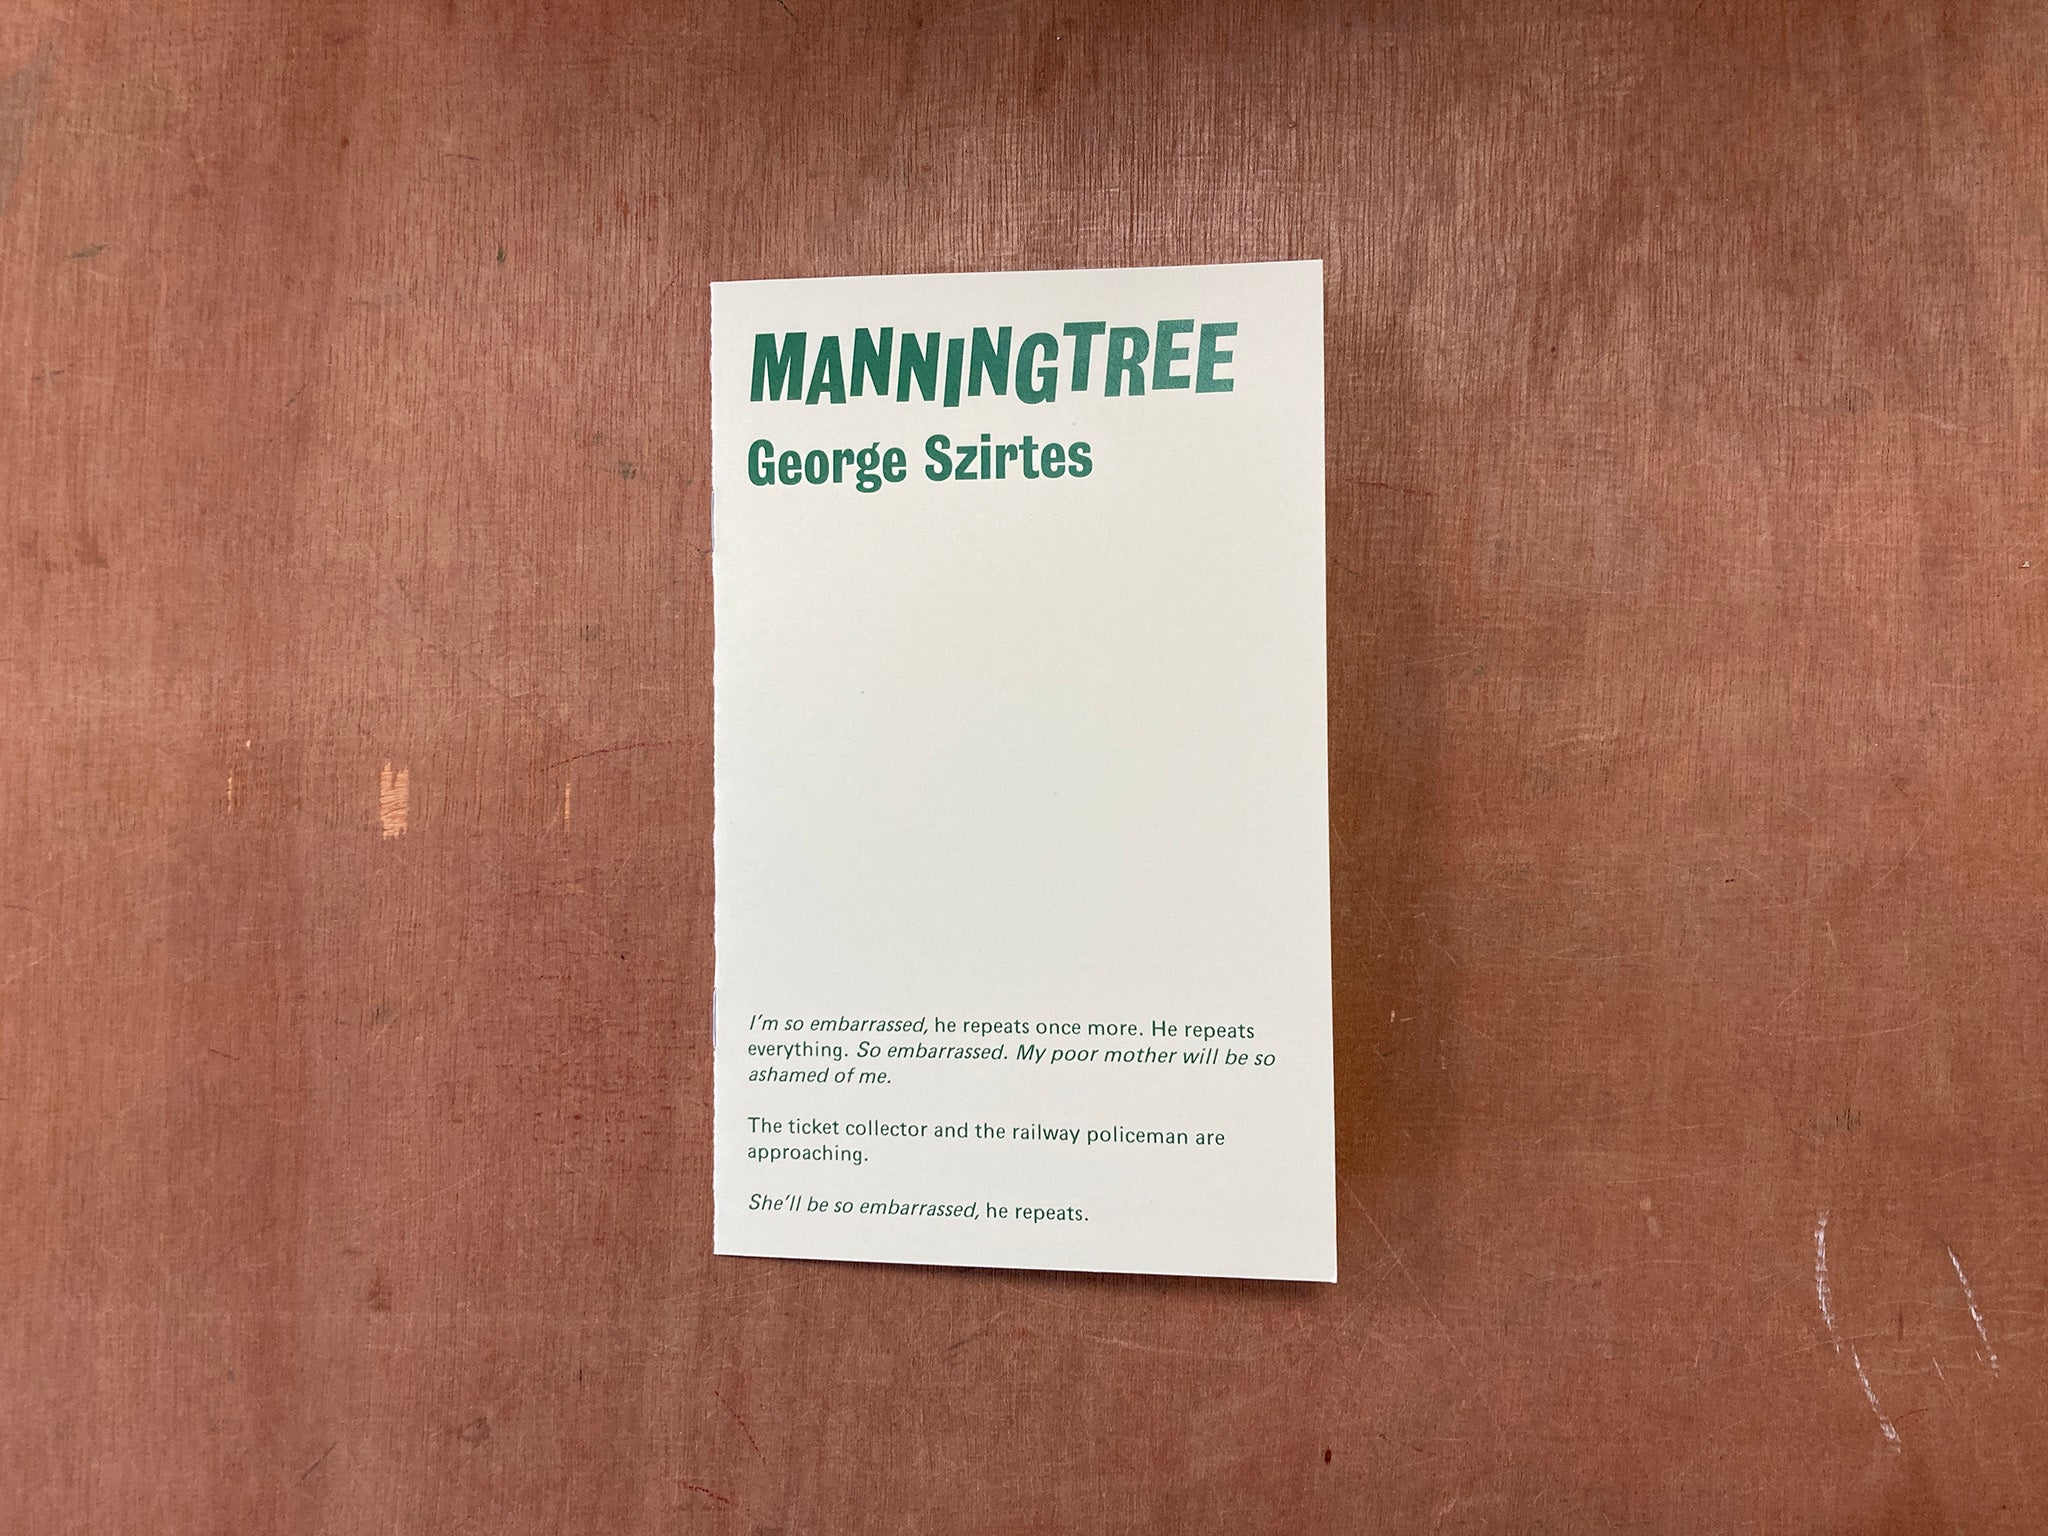 MANNINGTREE by George Szirtes